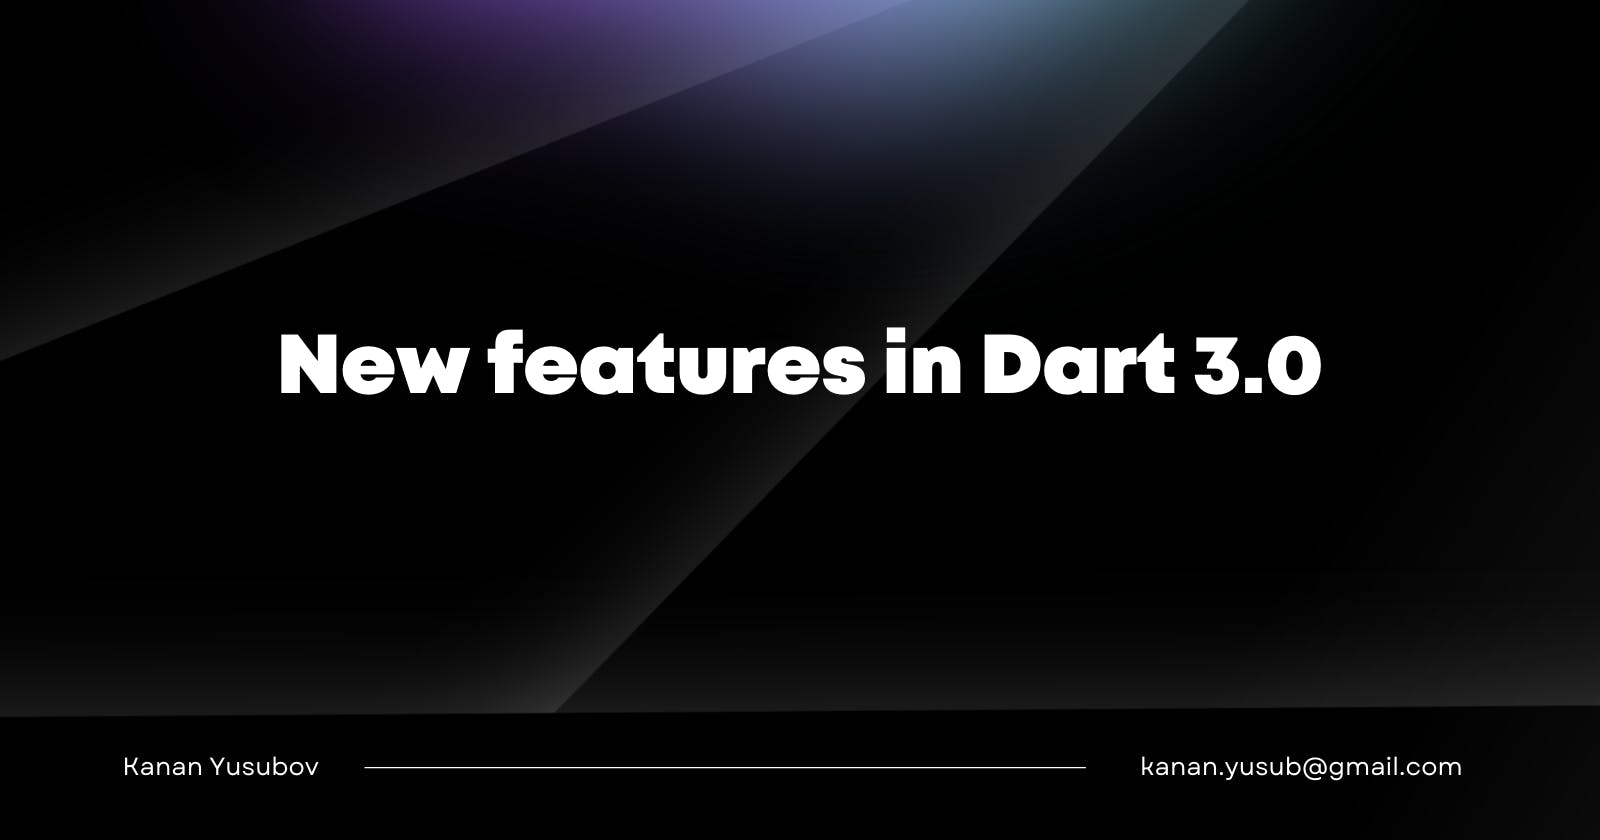 New features in Dart 3.0